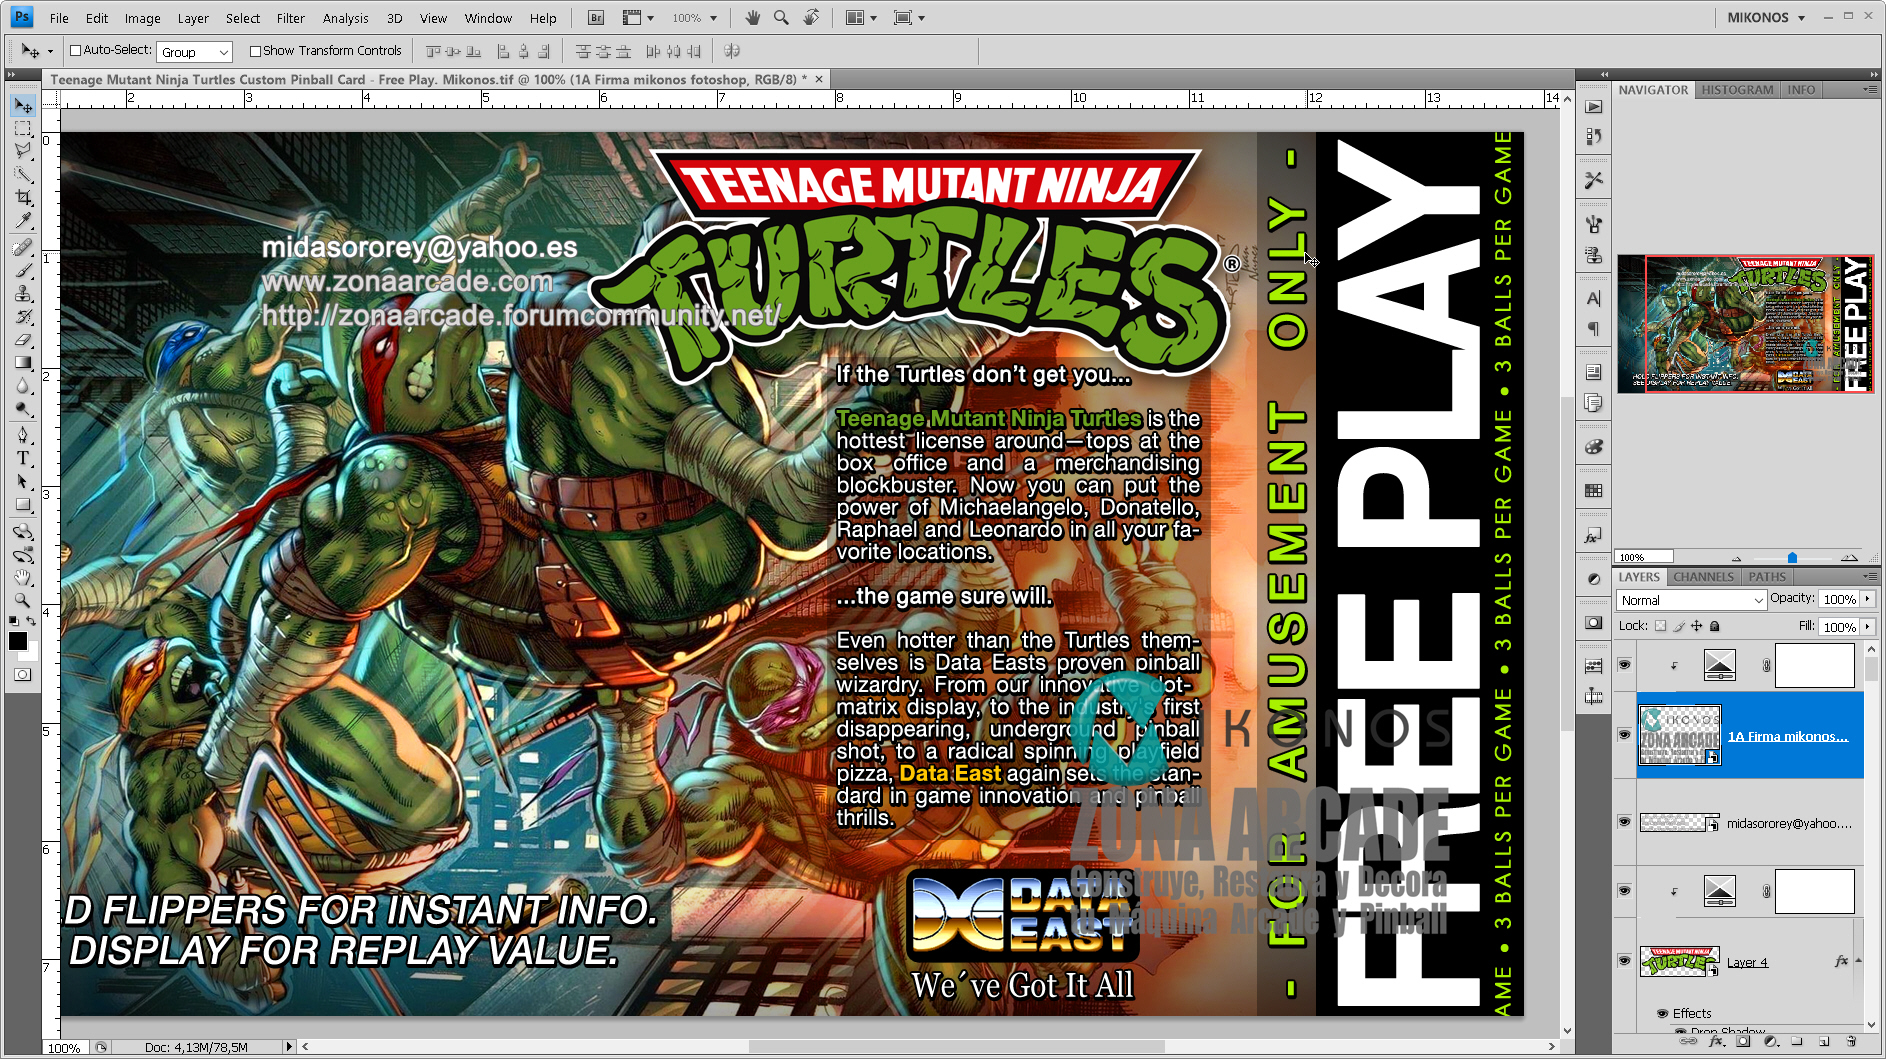 Teenage Mutant Ninja Turtles Pinball Card Customized - Free Play. Mikonos2